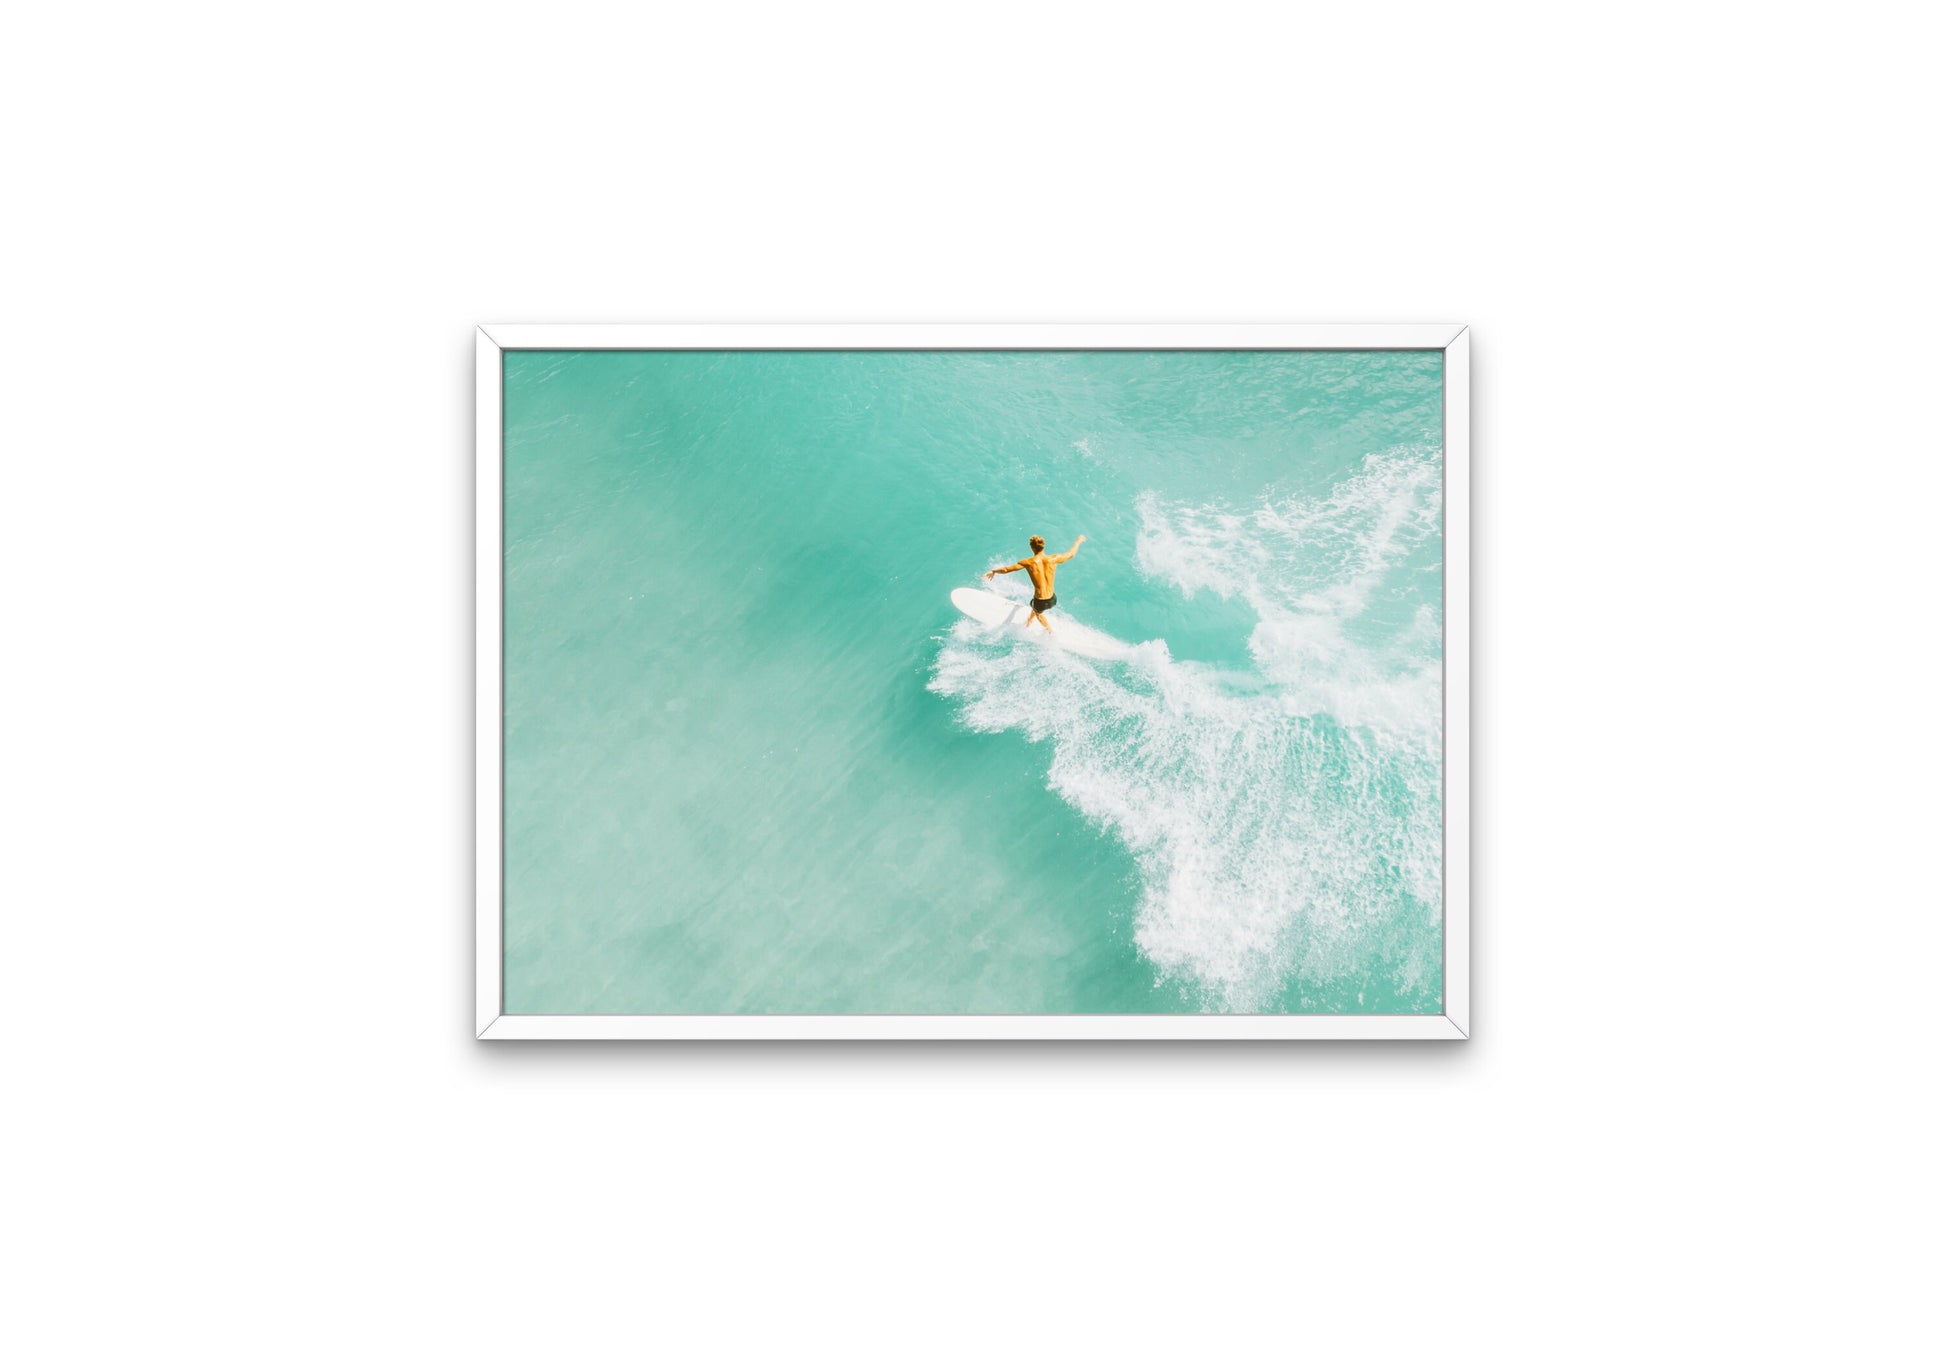 Aerial Surfer DIGITAL PRINT, aerial photograph print, surf wall decor, surfboard print, surfing photo, horizontal art, over bed wall art